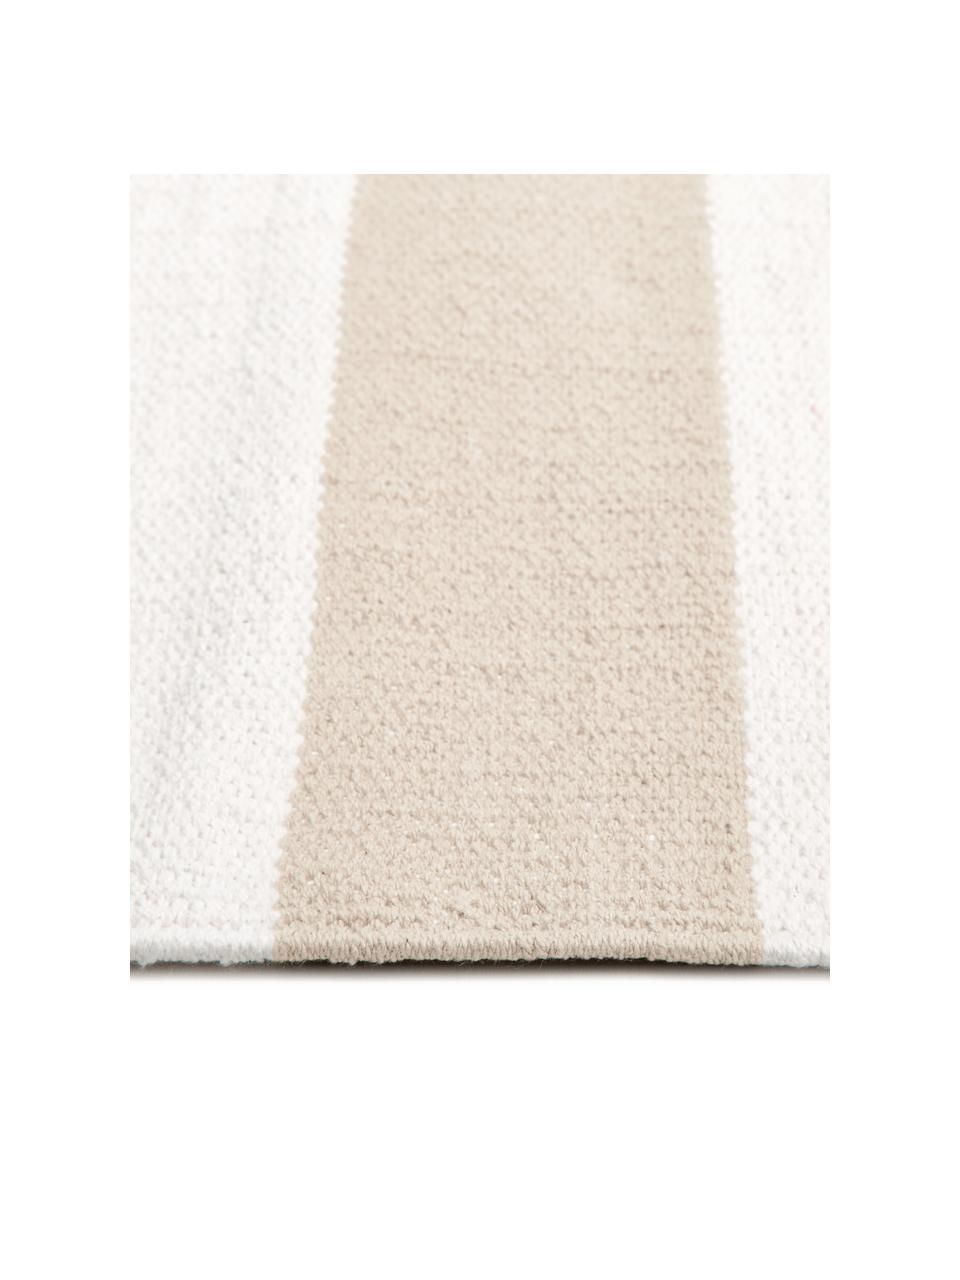 Alfombra artesanal de algodón Blocker, 100% algodón, Blanco crema, gris pardo, An 200 x L 300 cm (Tamaño L)